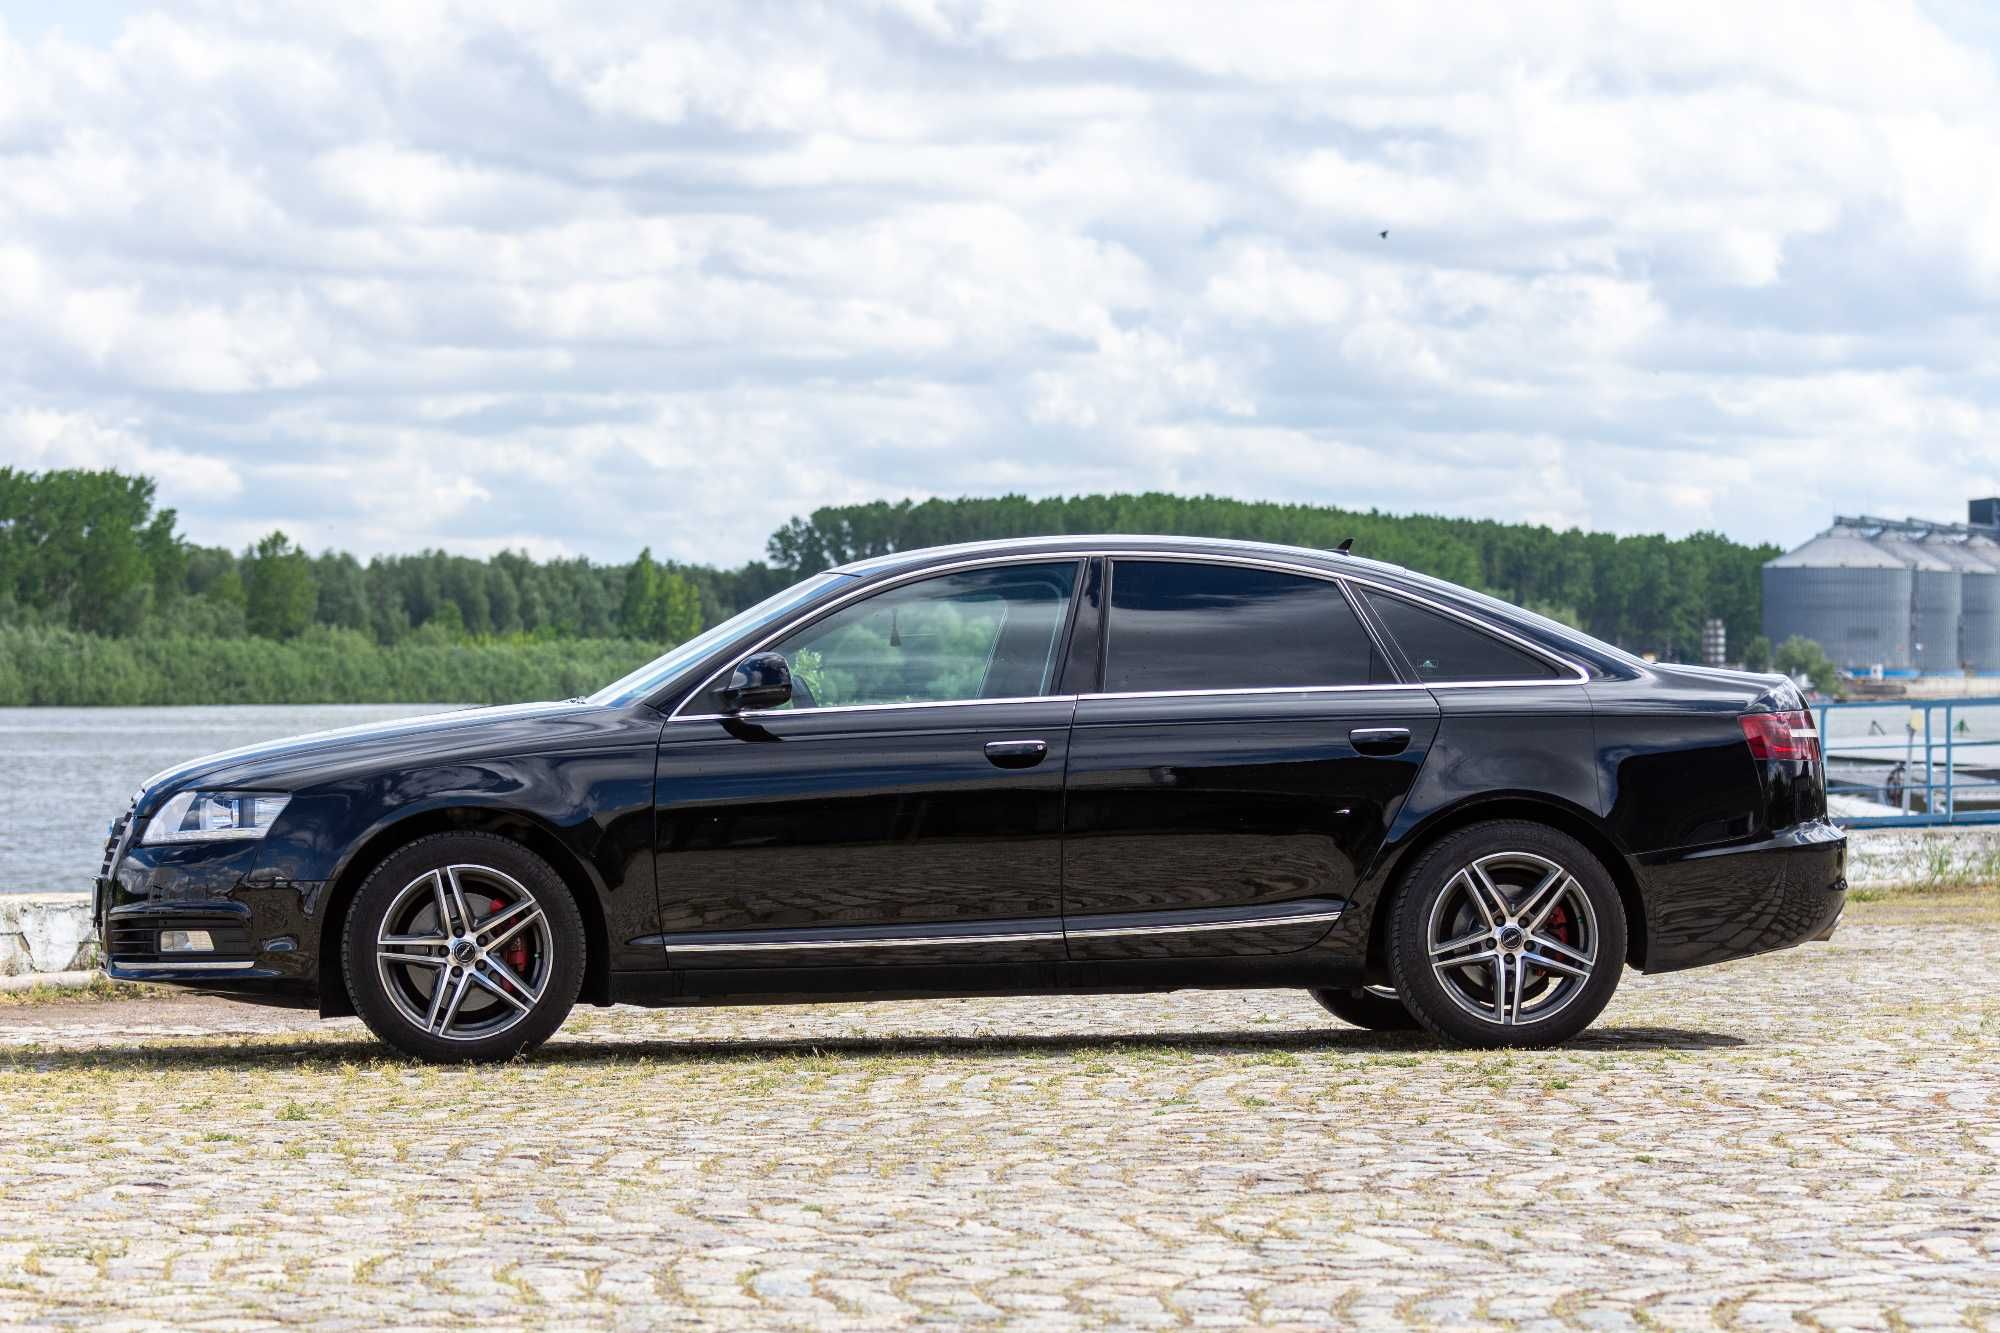 Audi A6, Anul 2011 - Facelift, 2.0 Diesel - 170 CP, Euro 5